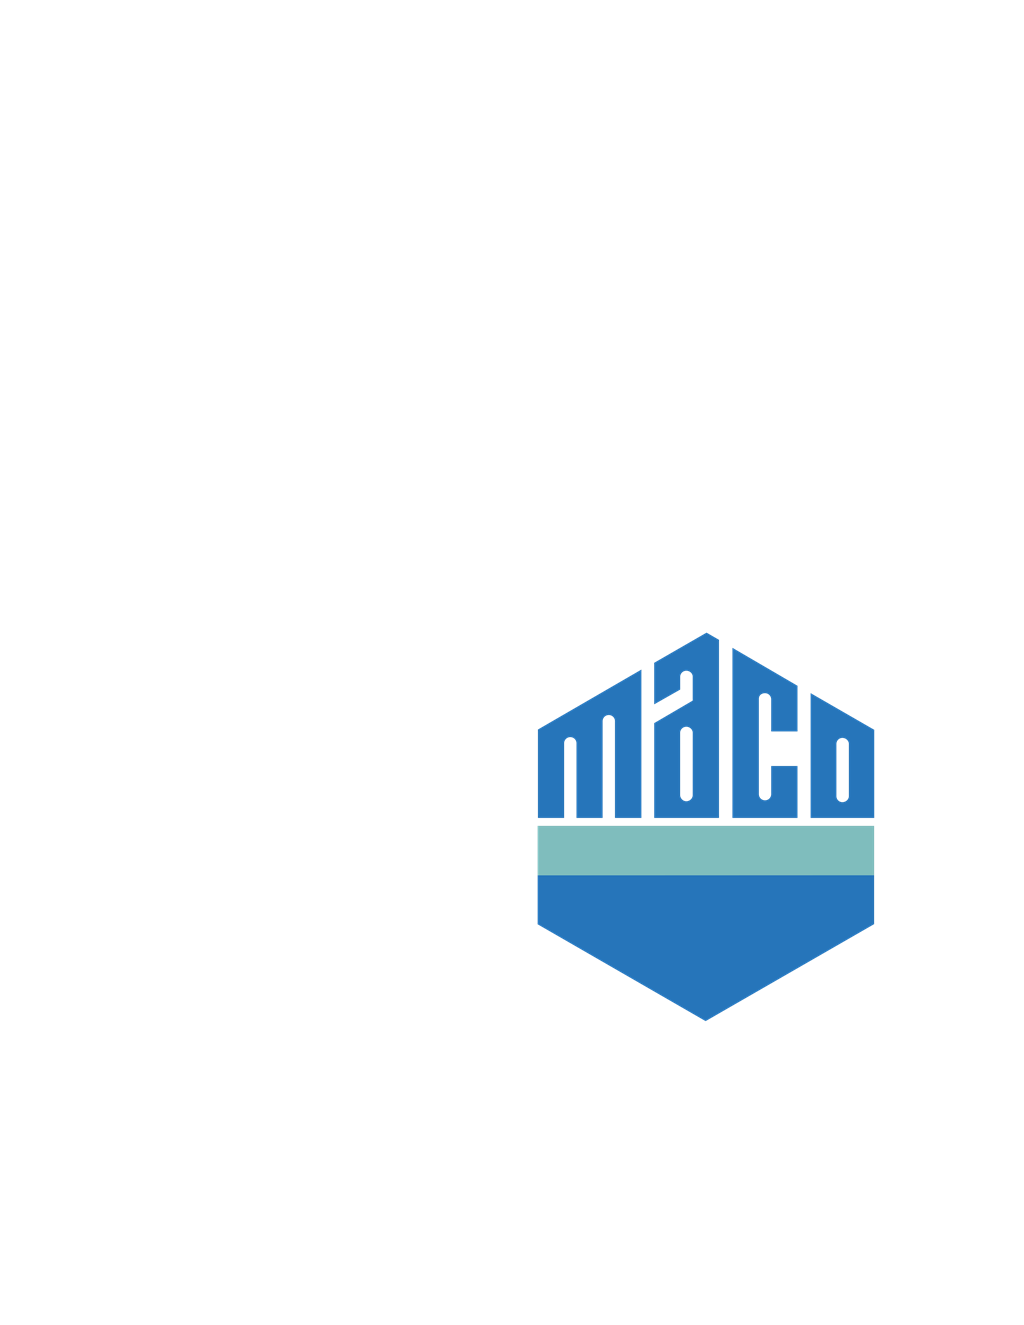 Maco logotype, transparent .png, medium, large